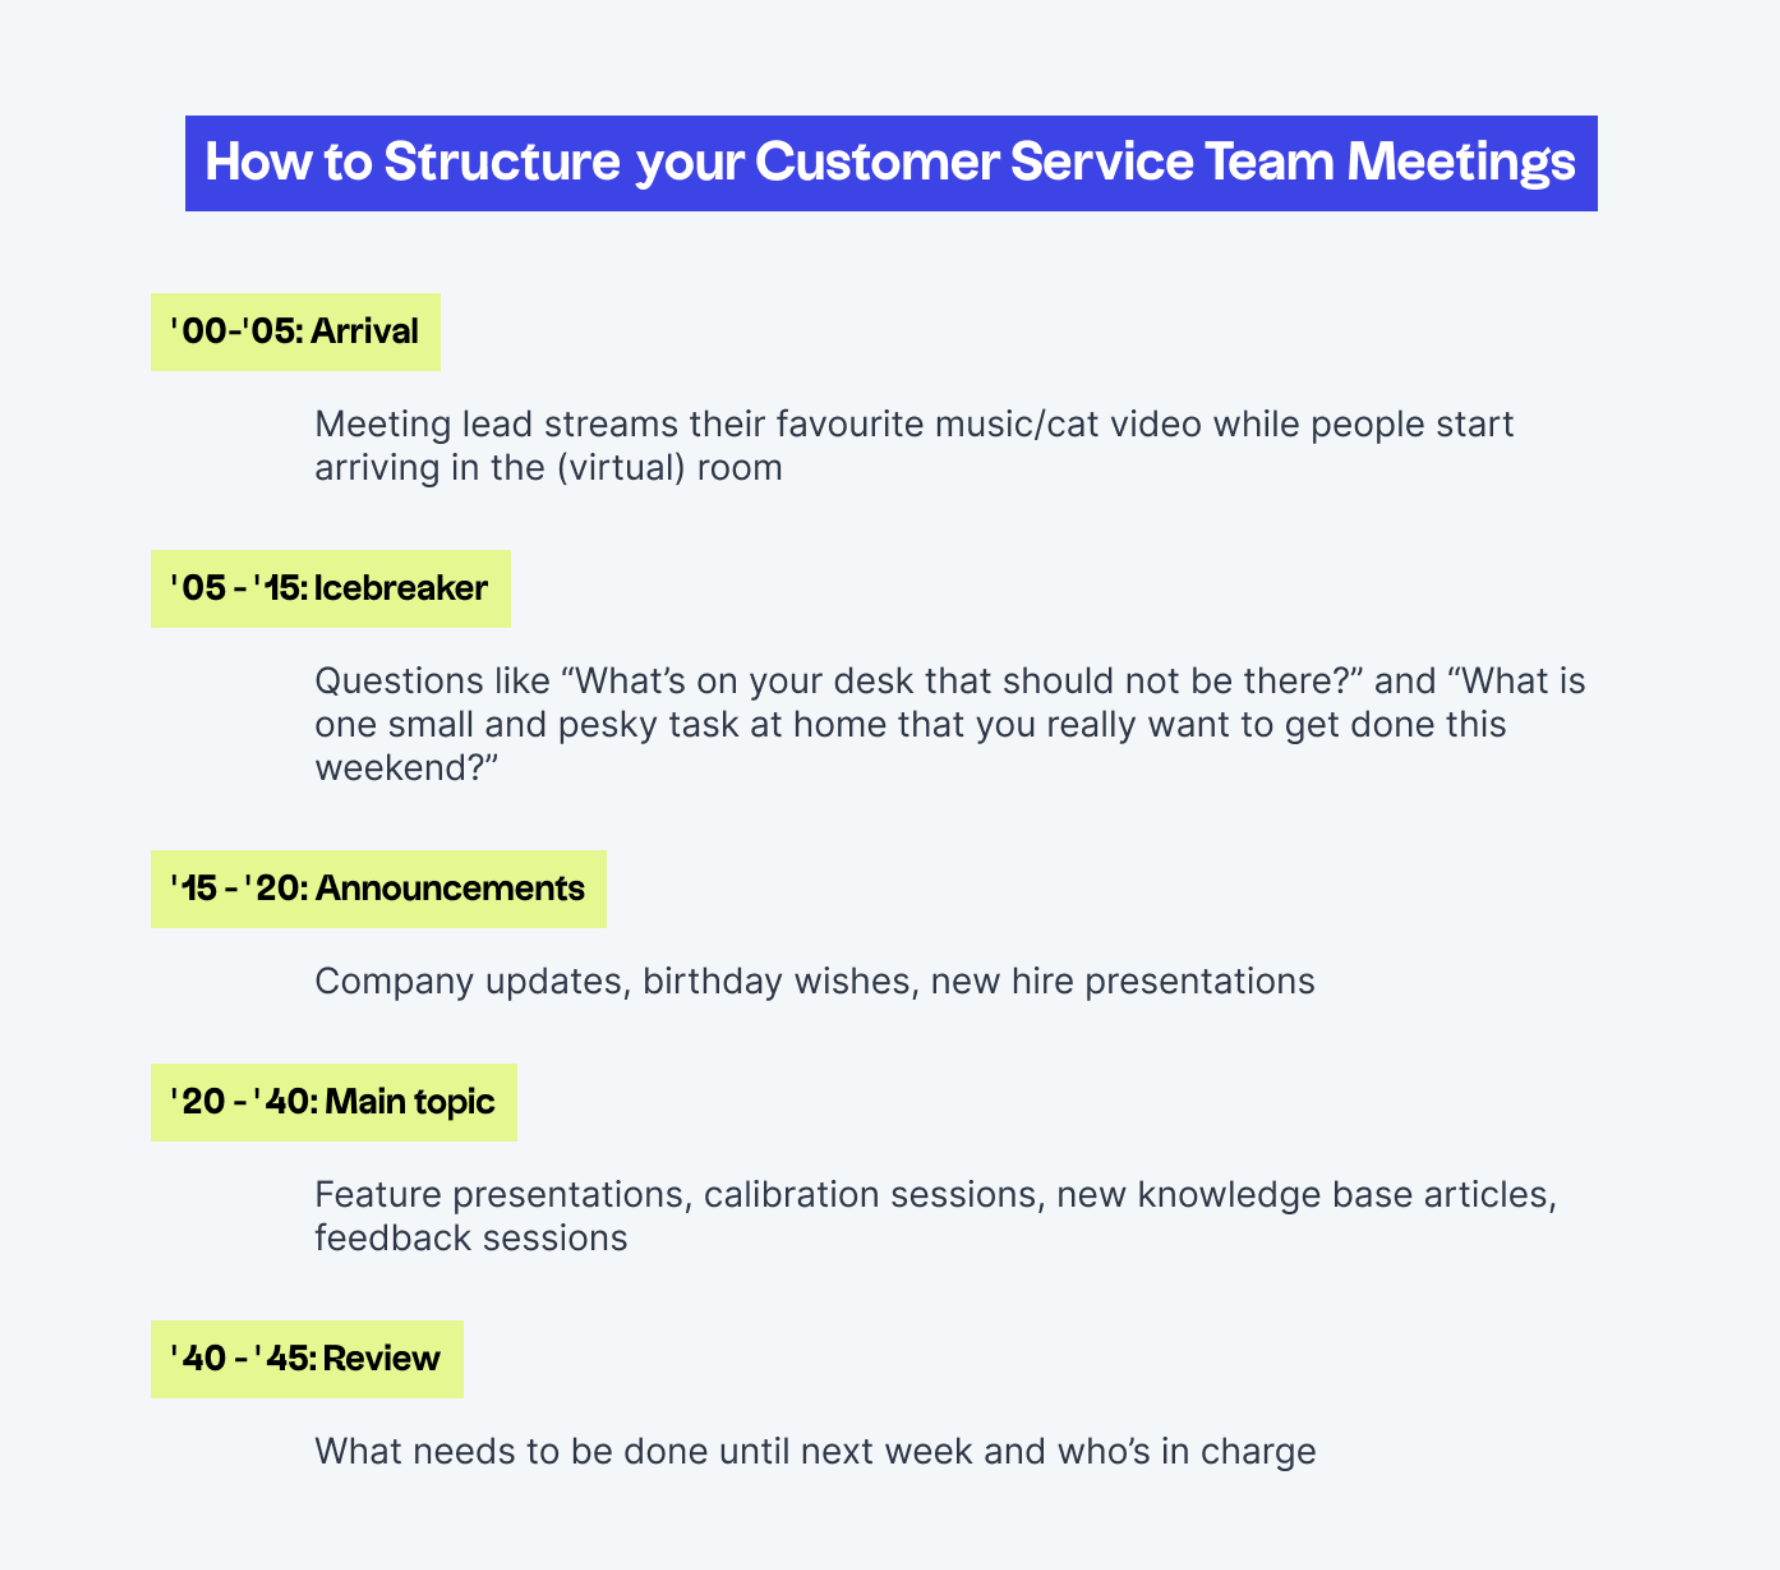 Customer Service Team Meeting Agenda (Free Template)